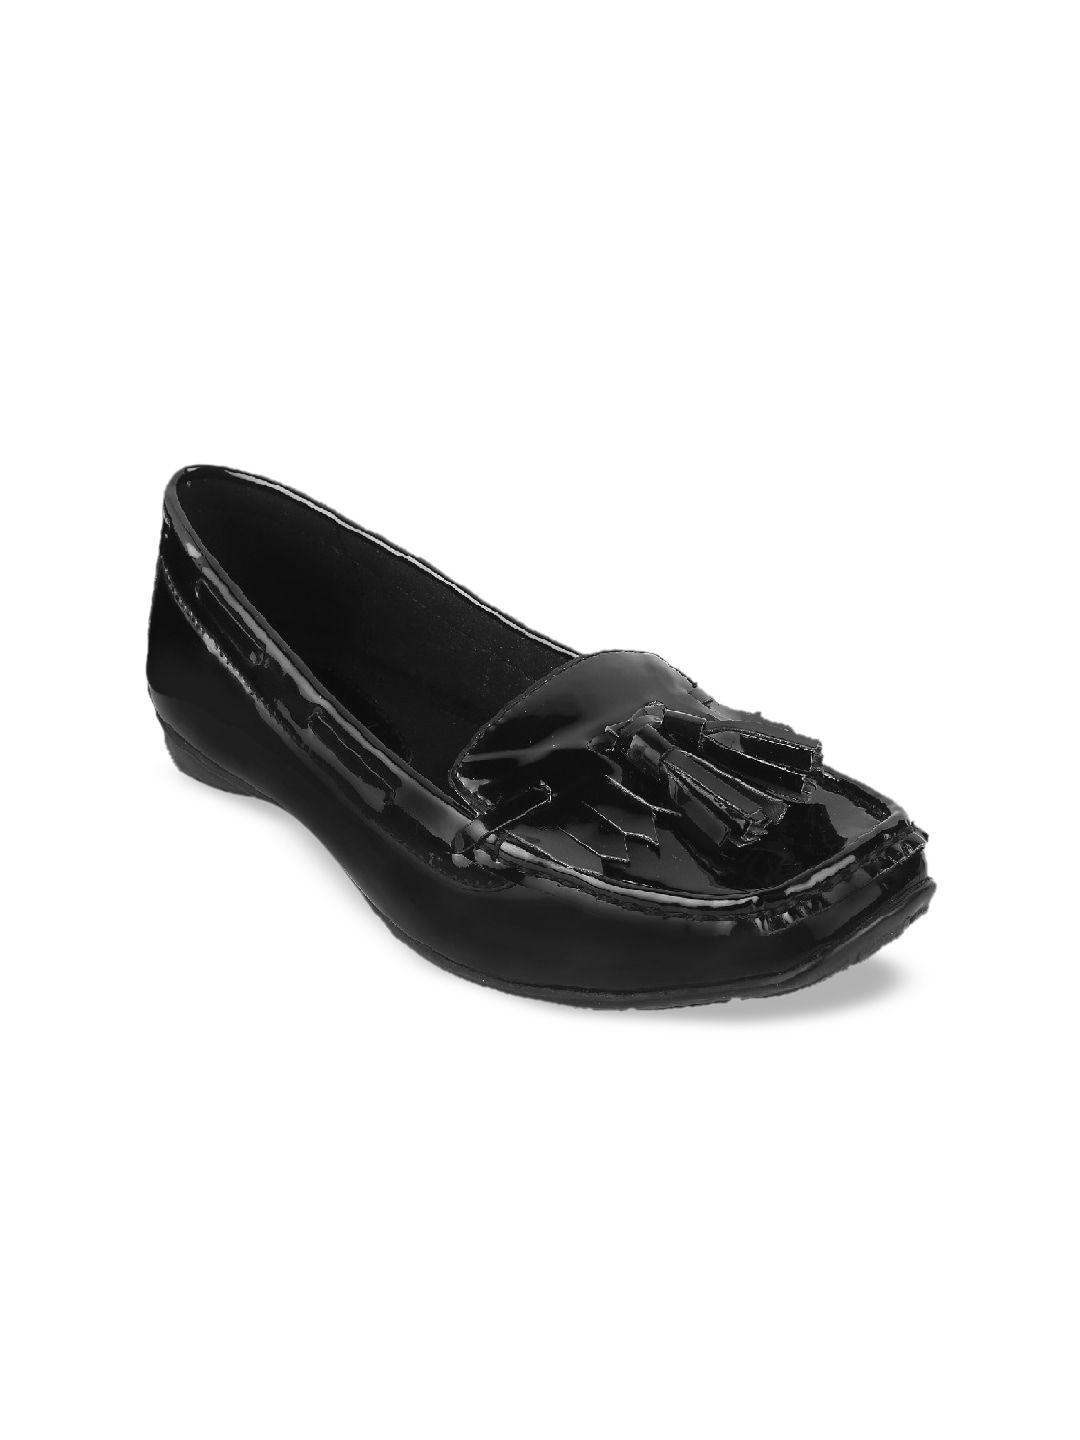 Catwalk Women Black Tassel Loafers Price in India